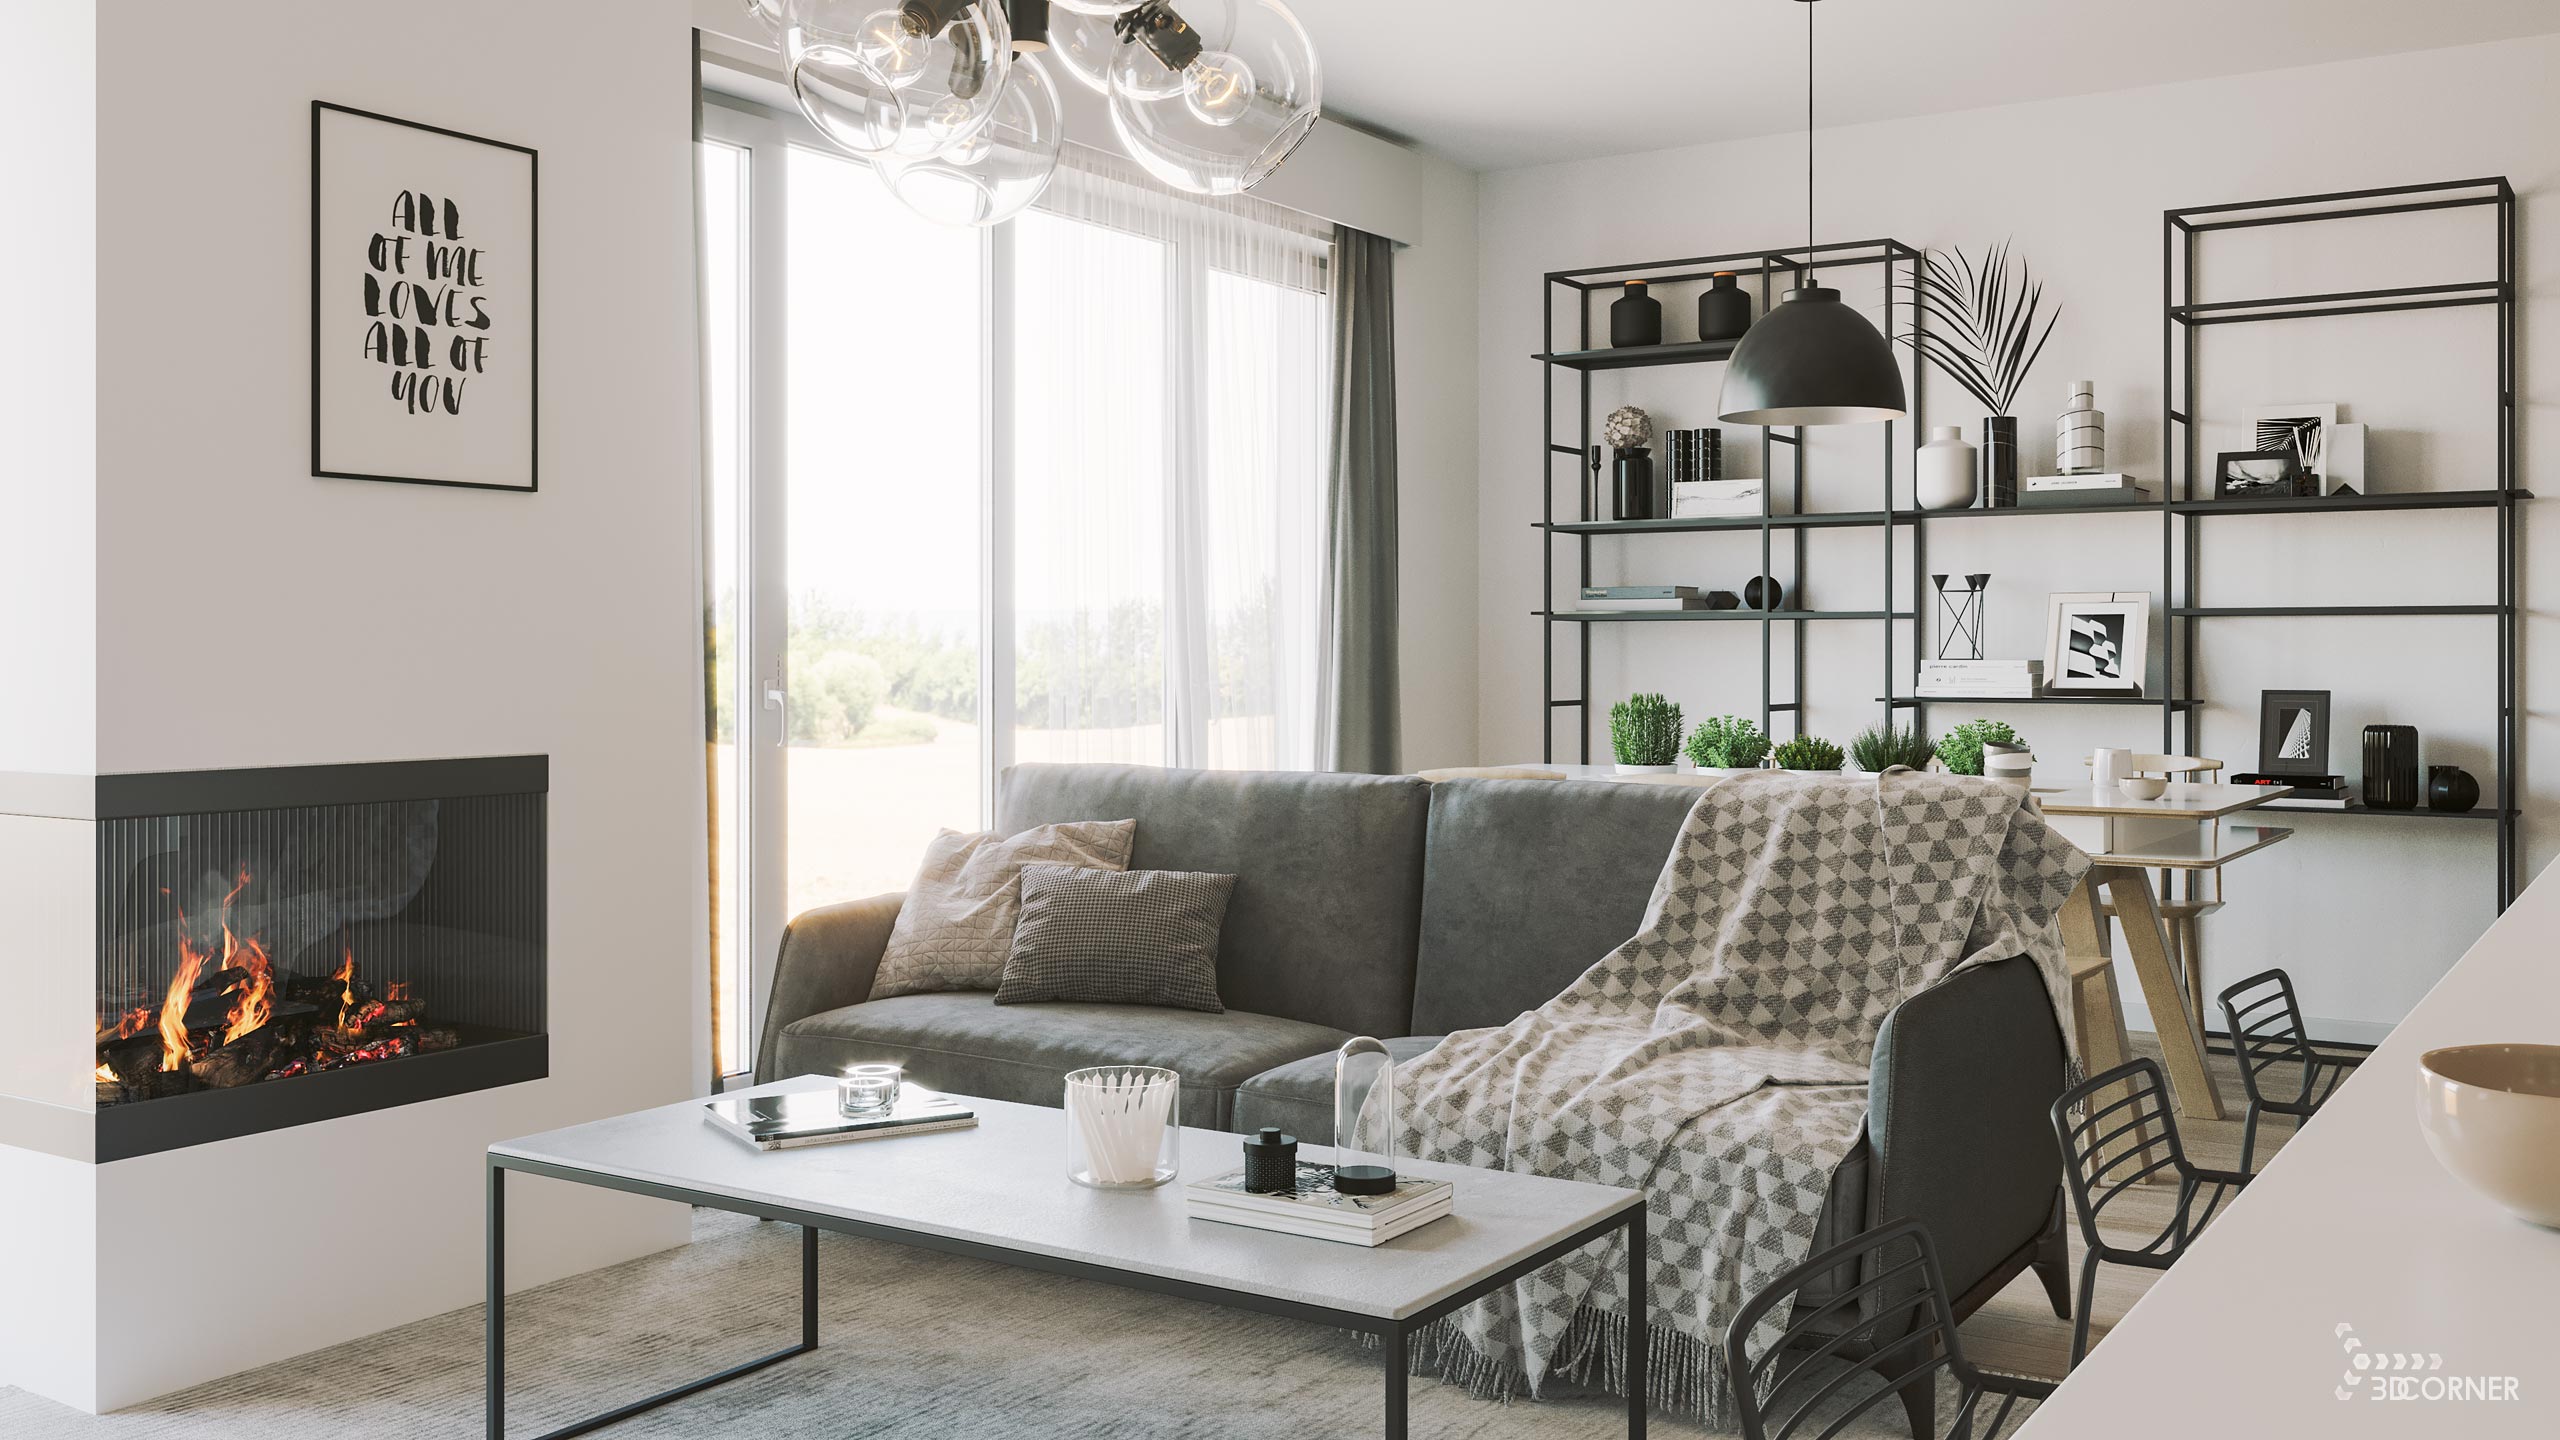 visualization interior photorealistic modern architecture apartment salon 3dcorner